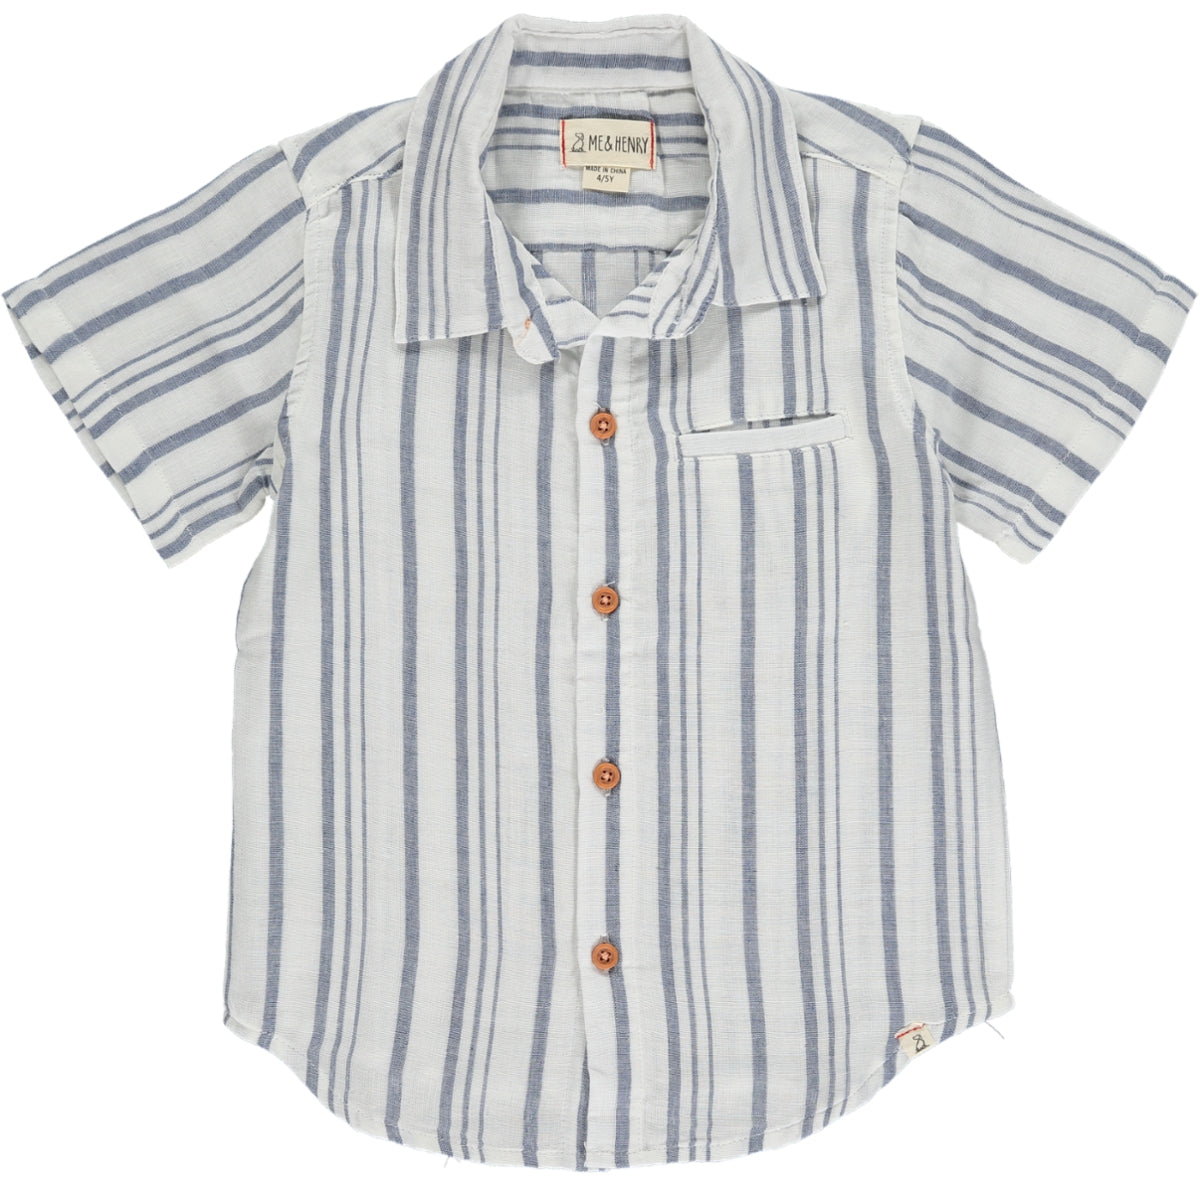 Me & Henry Newport Blue/White Stripes Woven Shirt